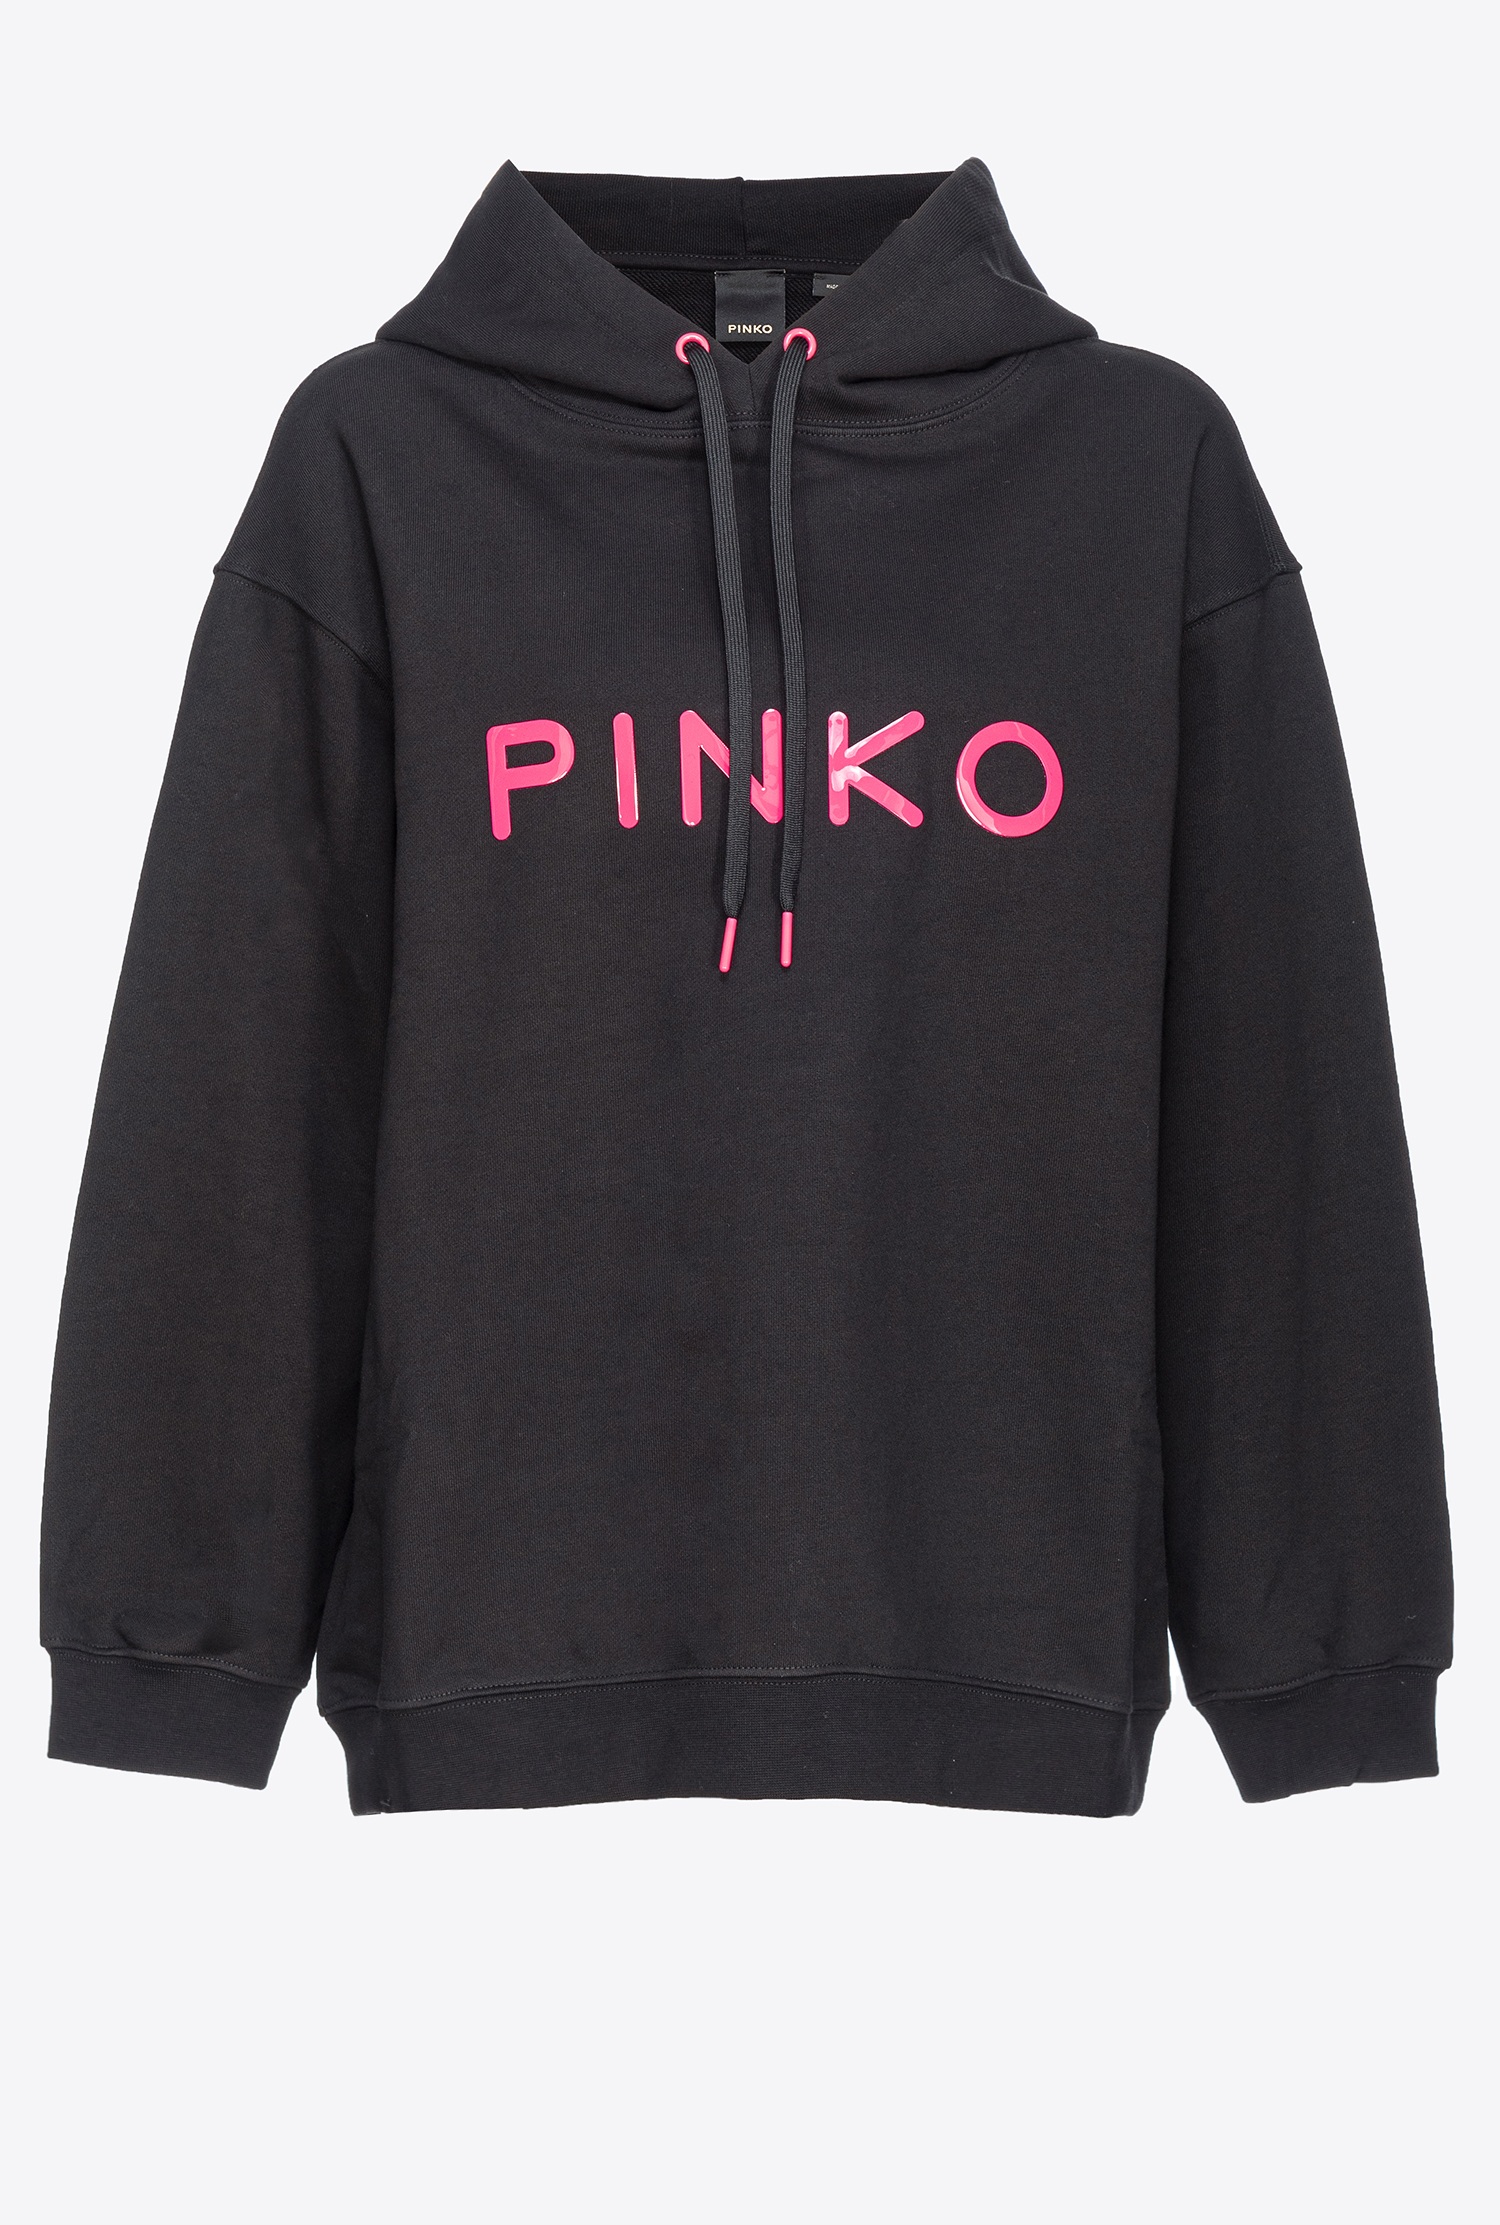 Pinko -print Sweatshirt In Limo Black